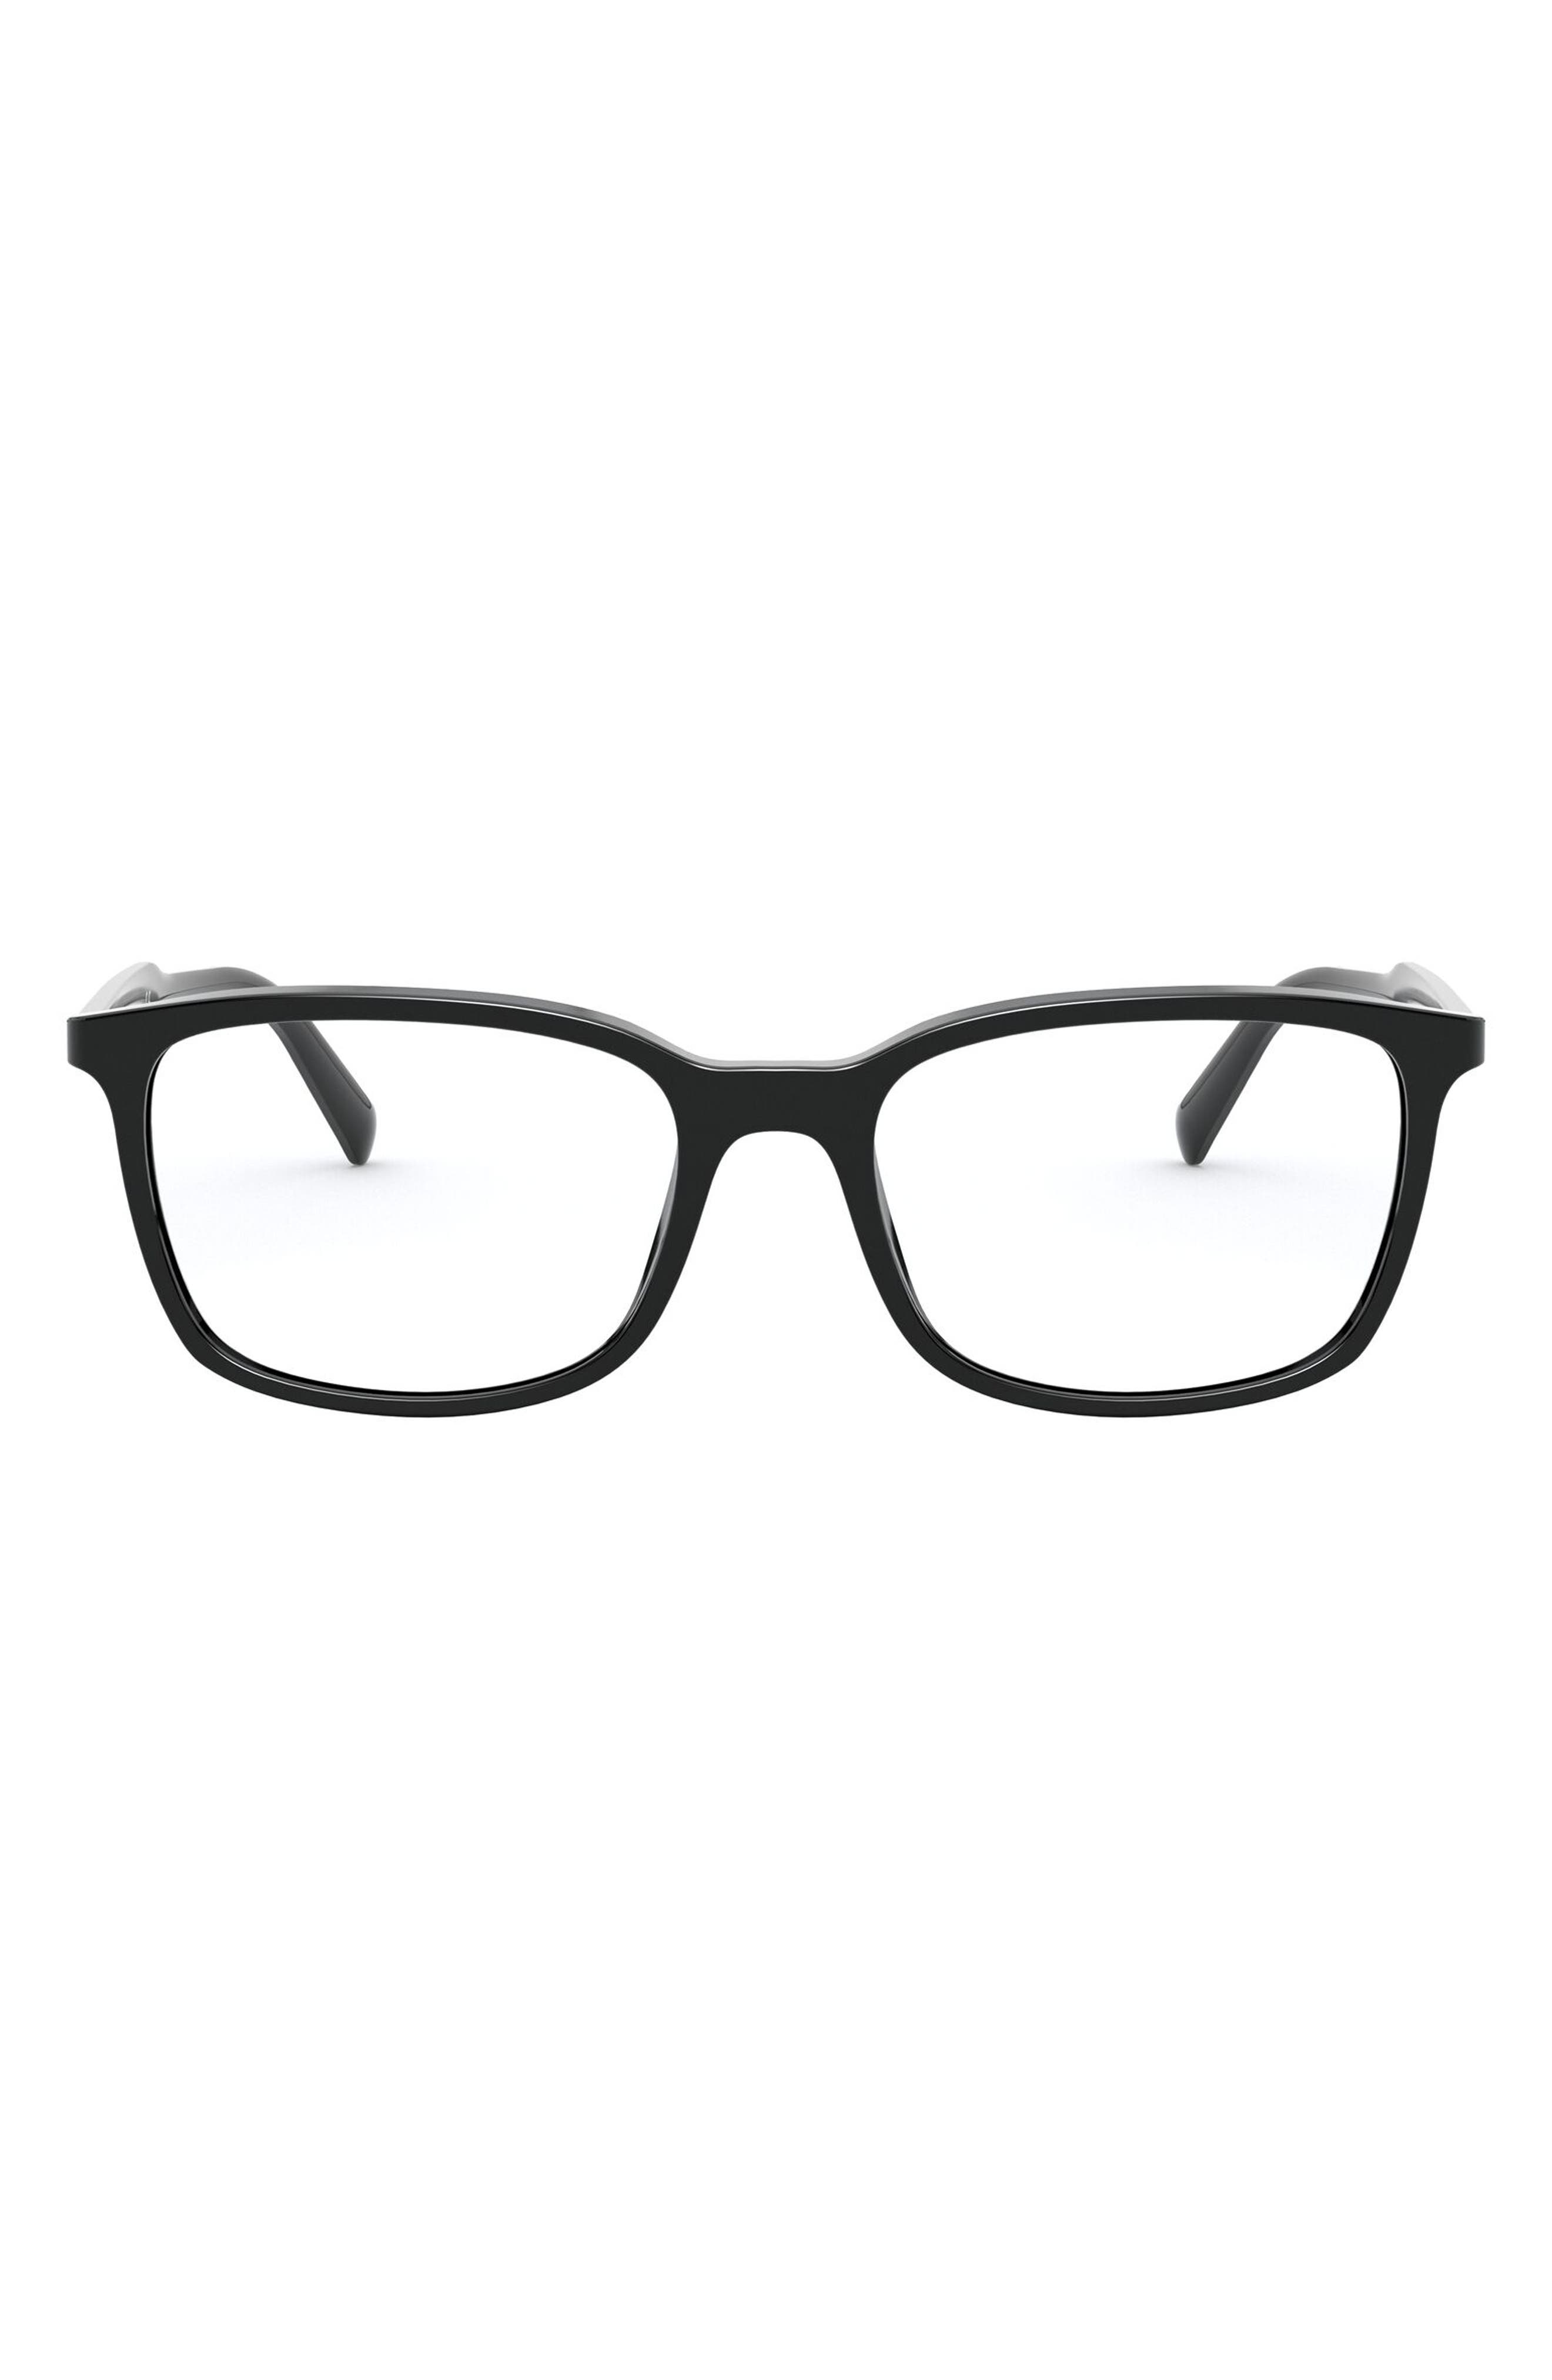 Prada 55mm Rectangular Optical Glasses in Black at Nordstrom